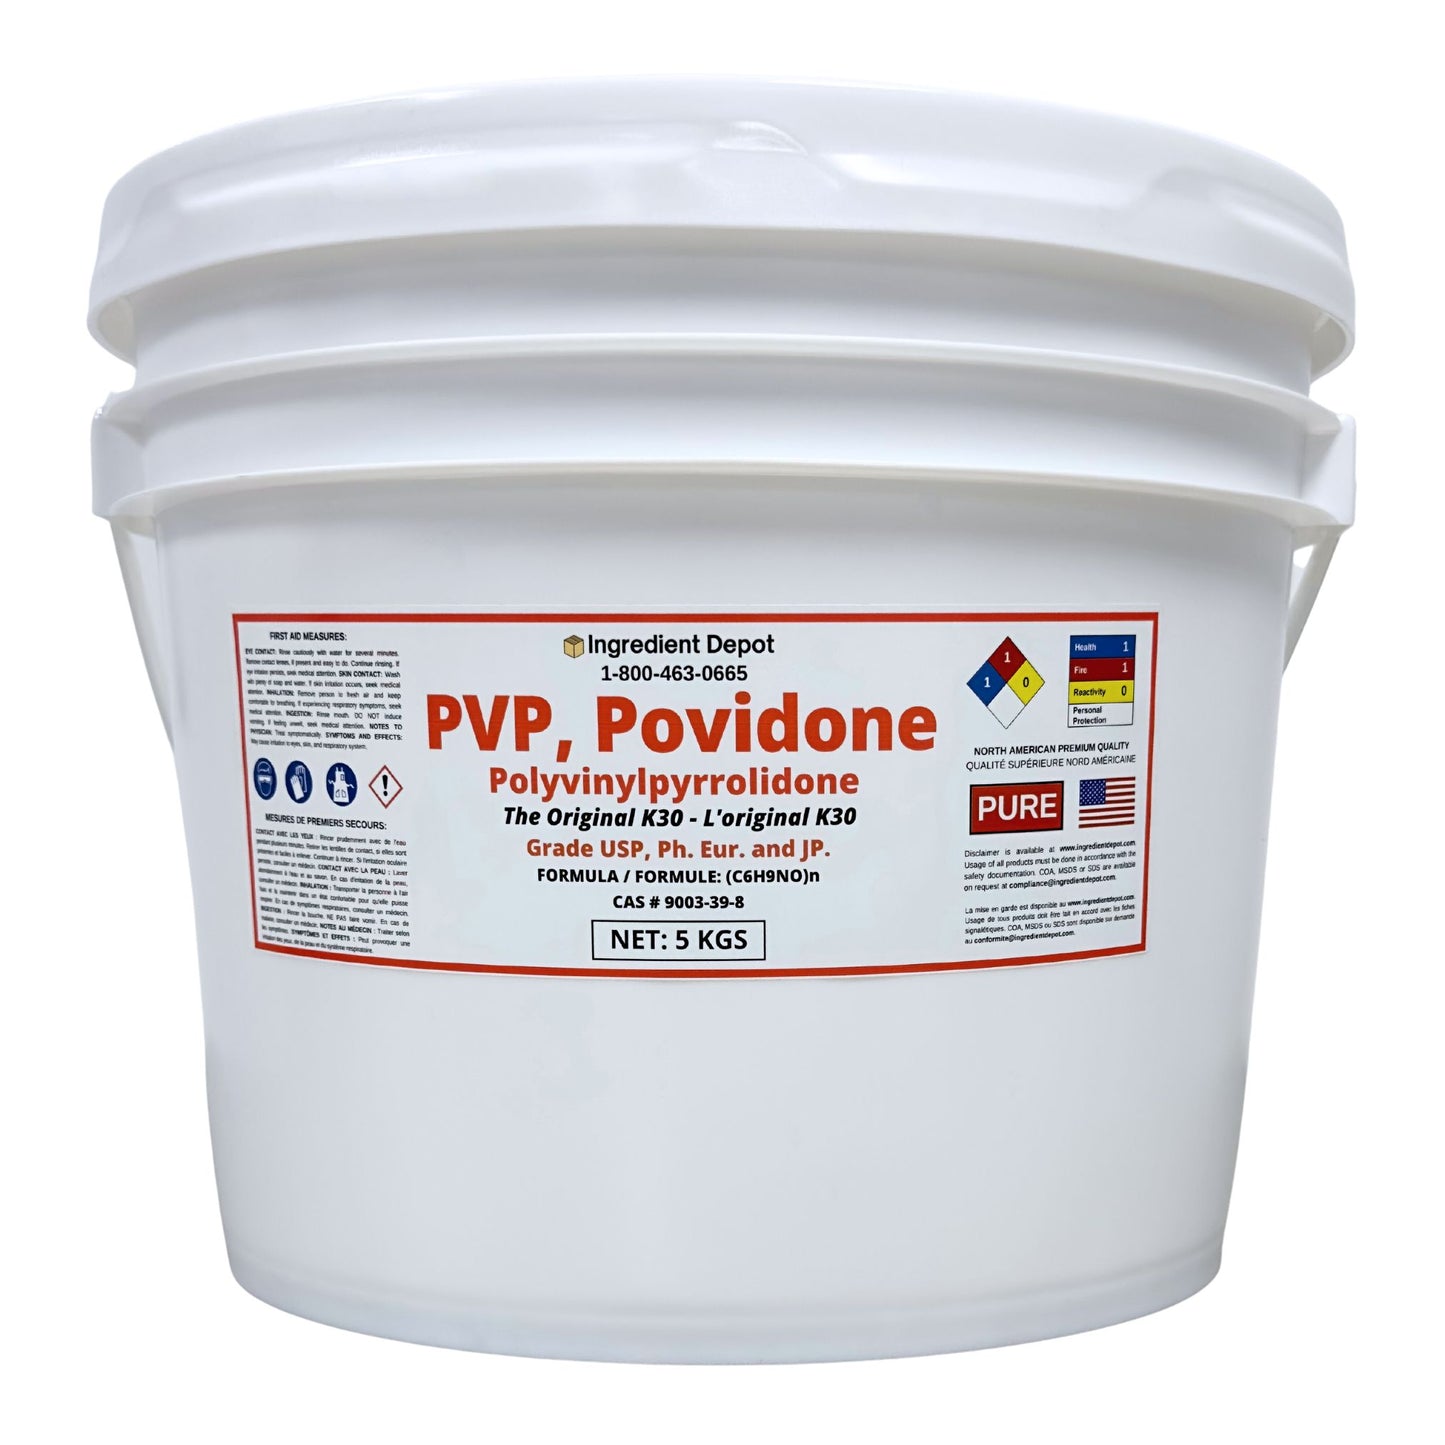 PVP Original K30, Povidone, Polyvinylpyrrolidone 5 kgs - IngredientDepot.com